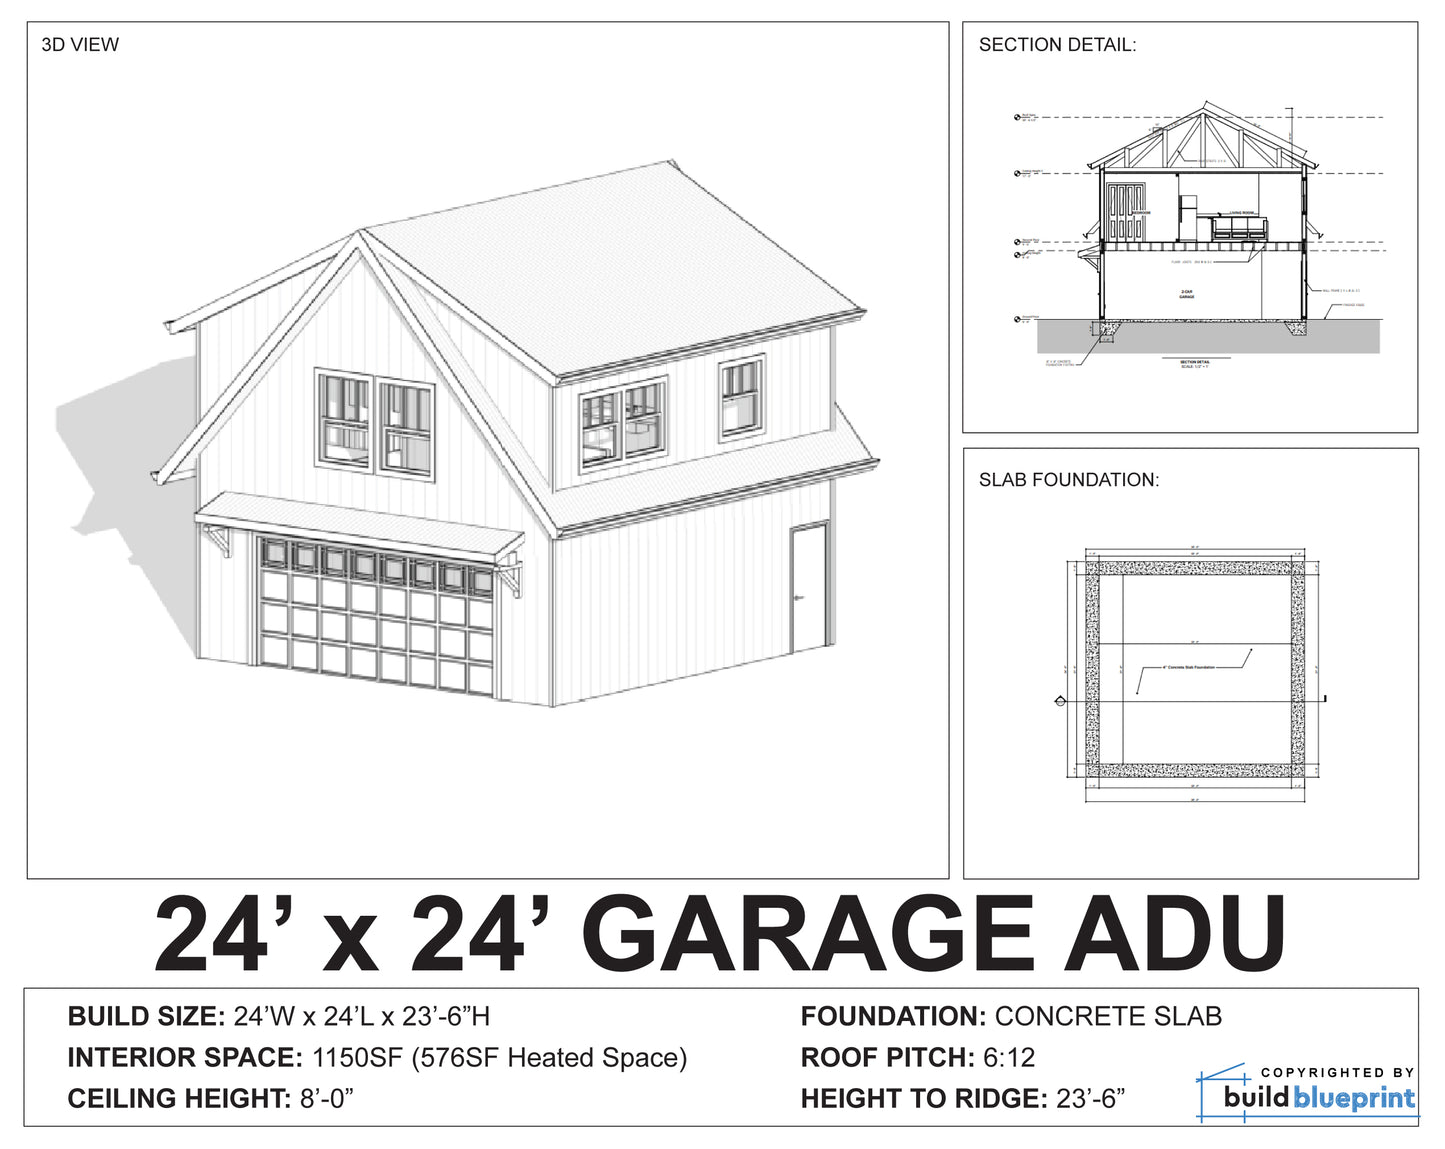 24'x24' Two Car ADU Garage Loft Architectural Plans